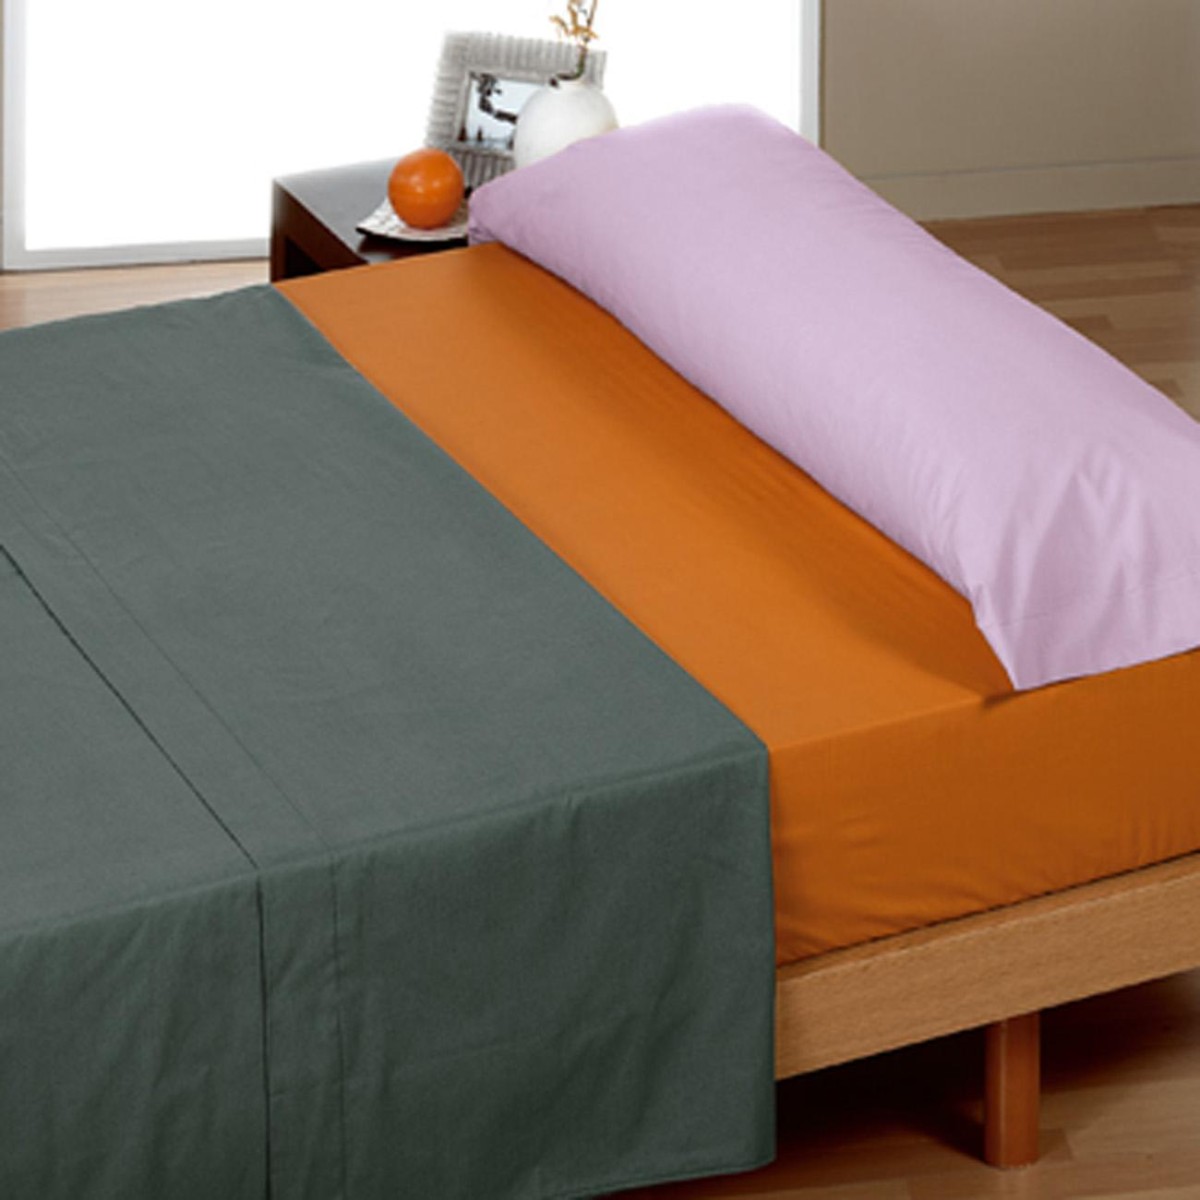 Funda de almohada 100% Algodón Negro 45x110 [Cama 90] BASIC